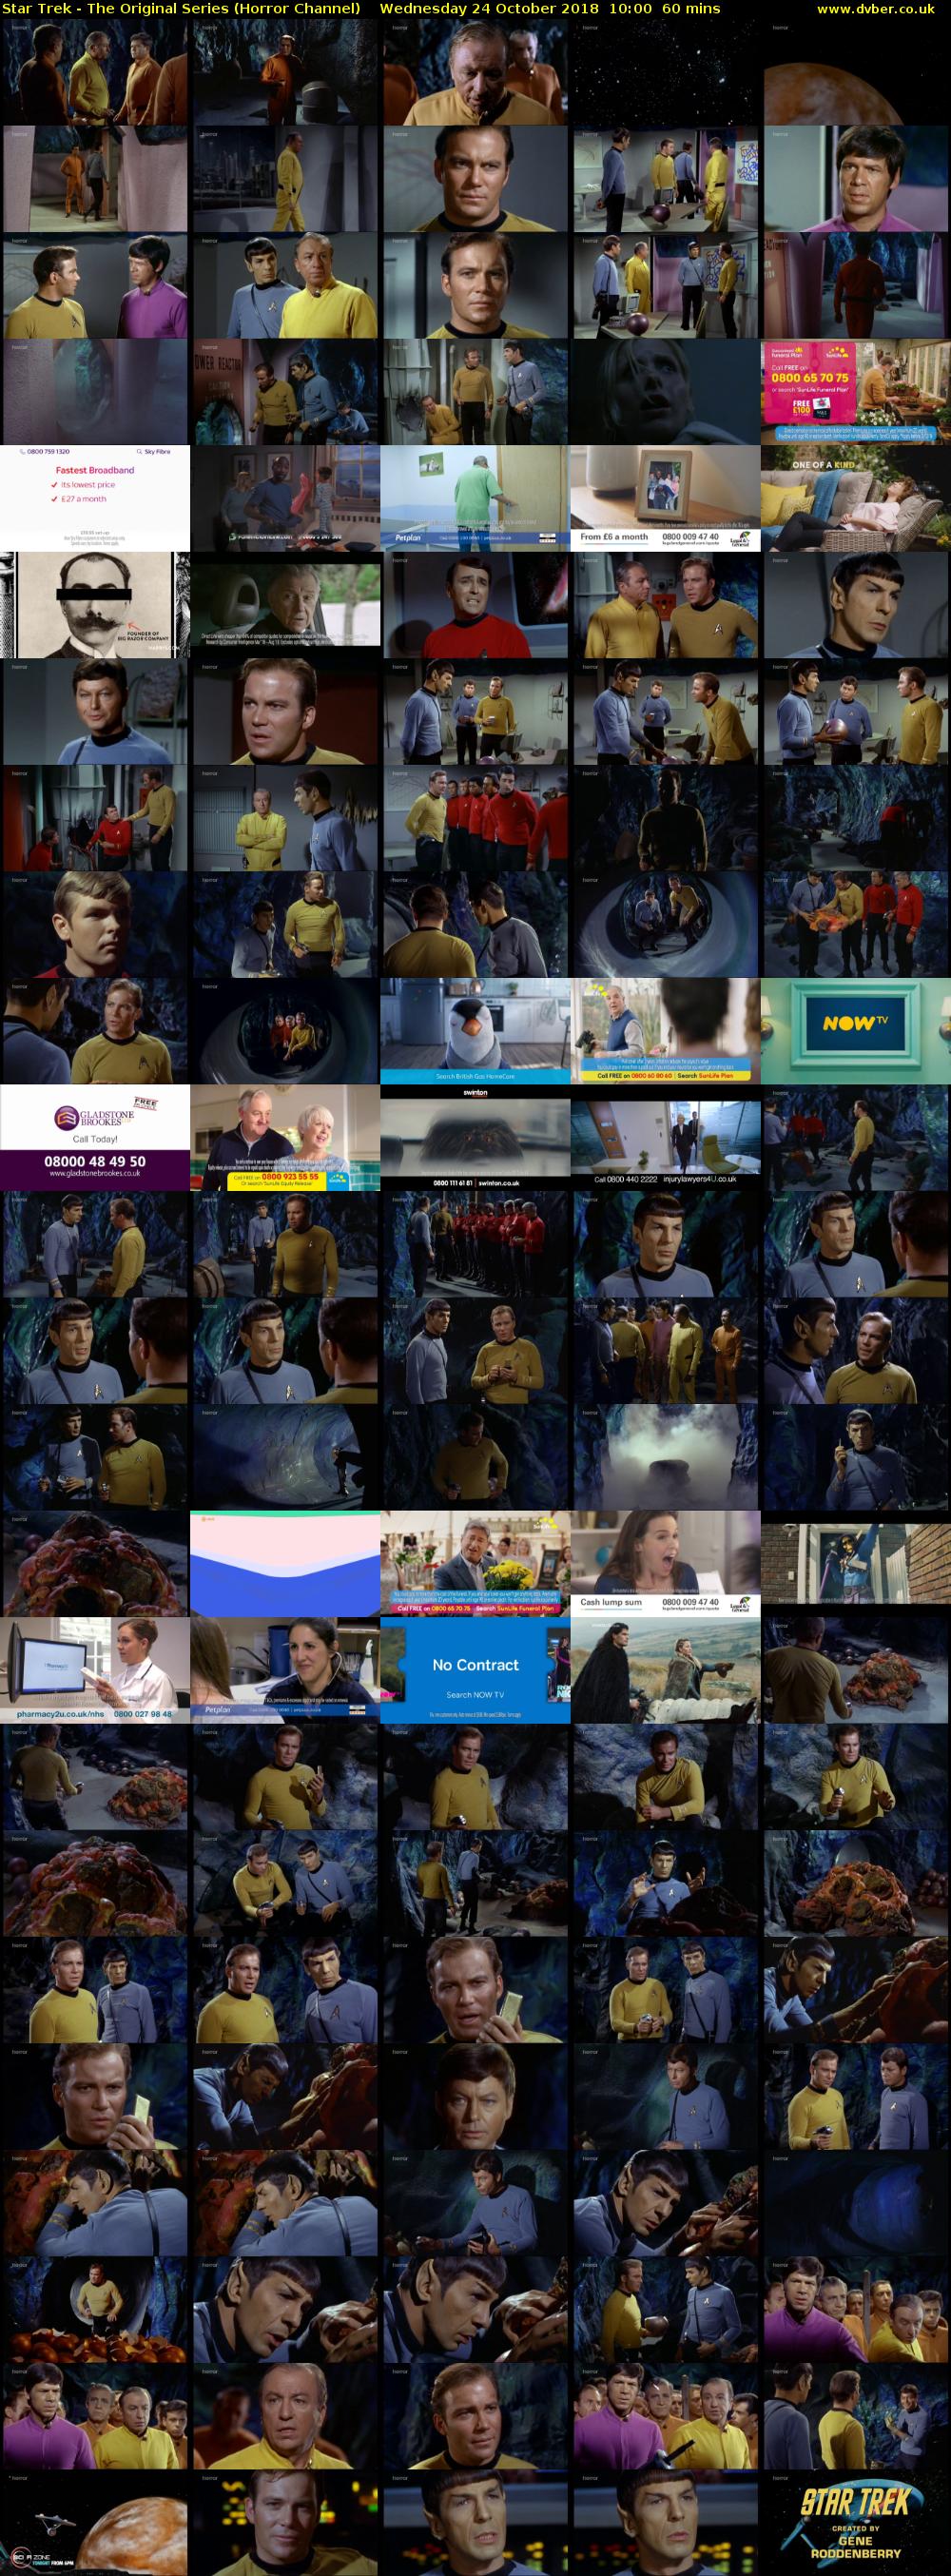 Star Trek - The Original Series (Horror Channel) Wednesday 24 October 2018 10:00 - 11:00